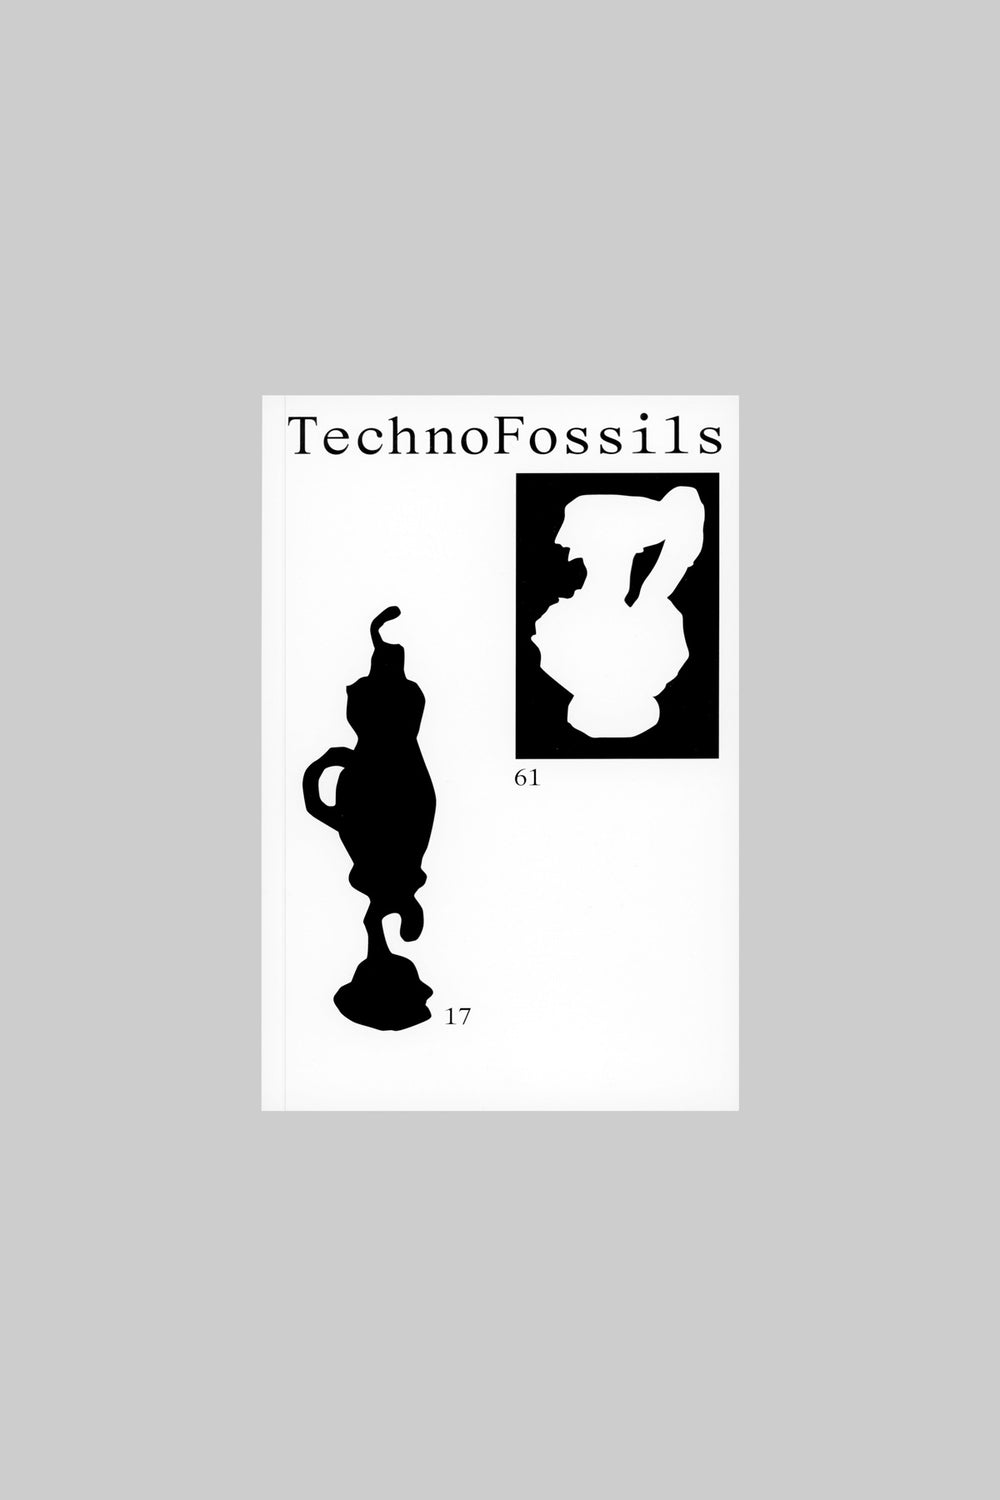 TechnoFossils